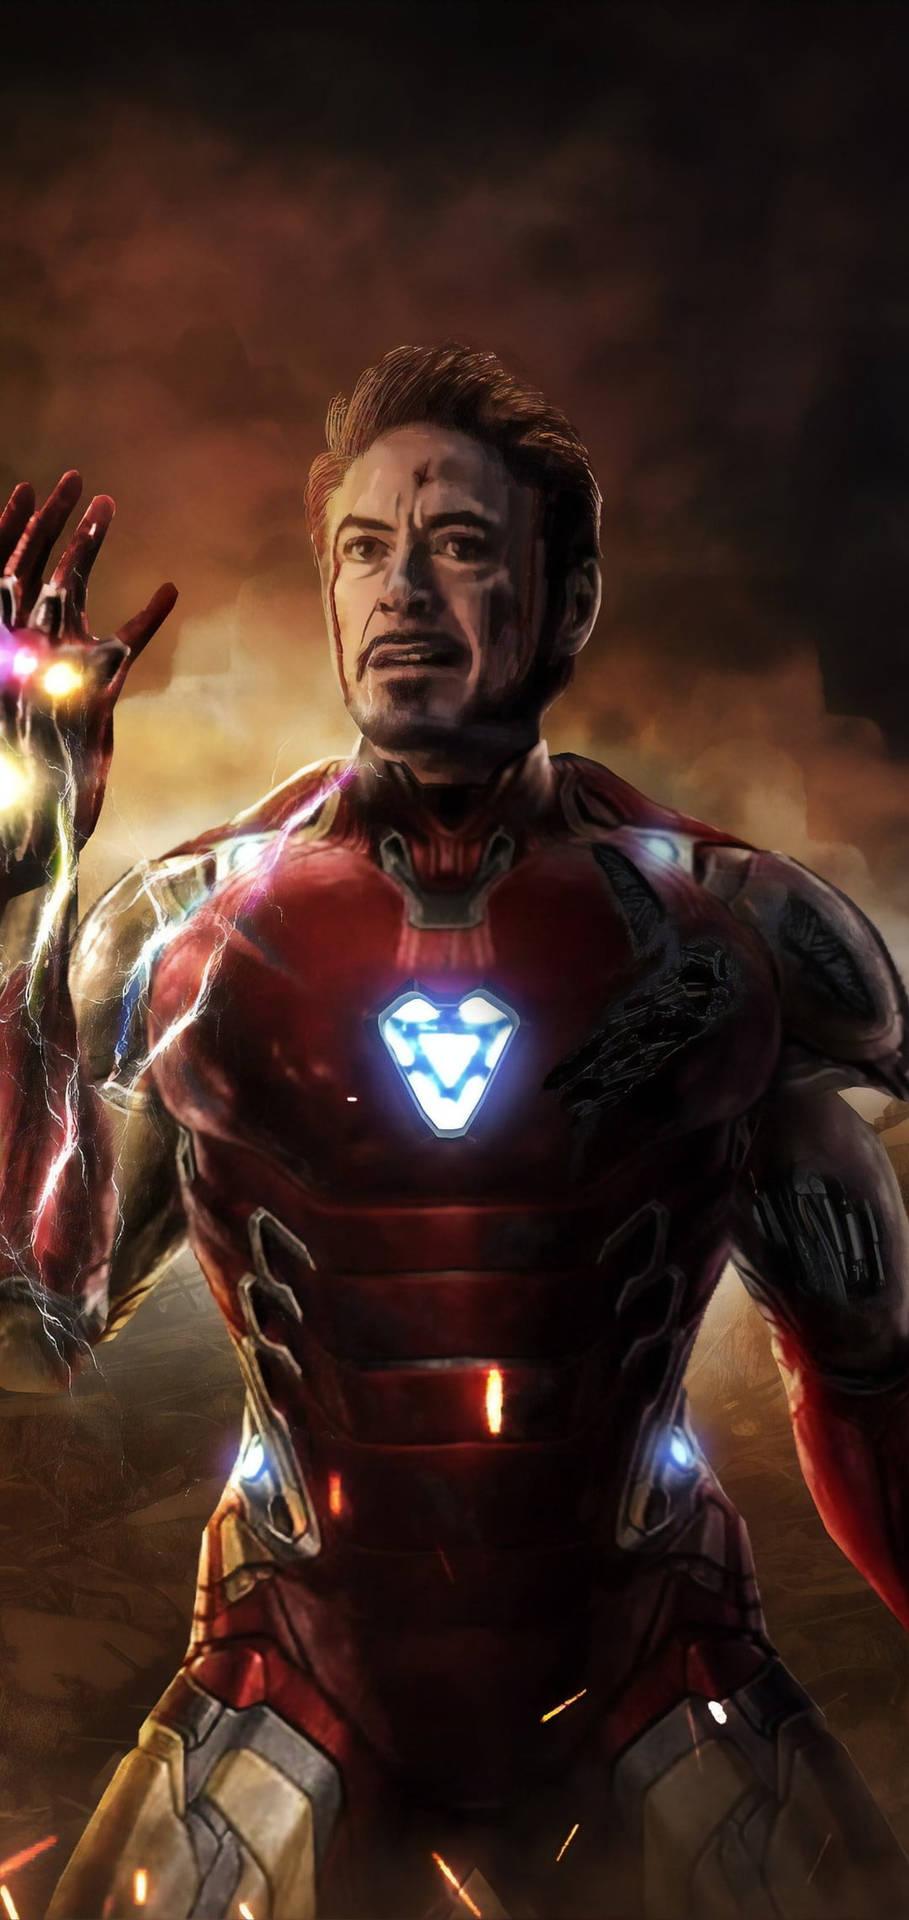 Iron Man Mark 85 Wallpaper